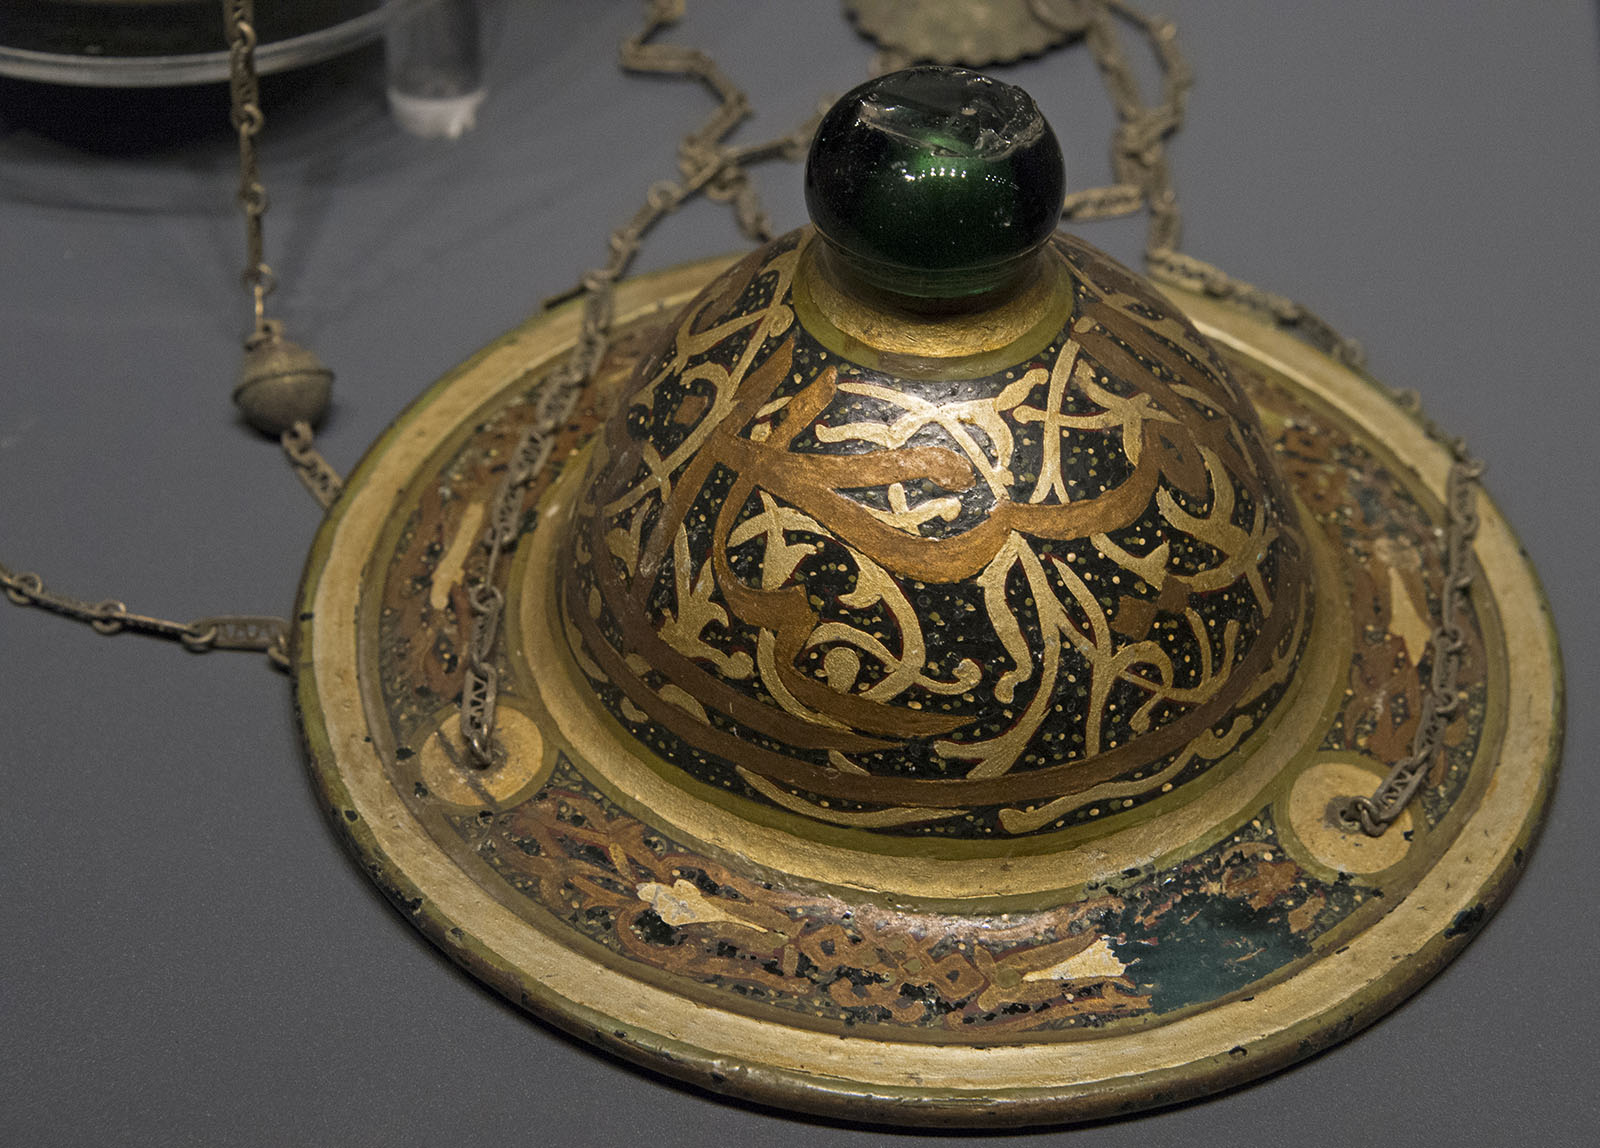 Istanbul Turkish and Islamic Museum Seljuq Exhibits 2015 9562.jpg